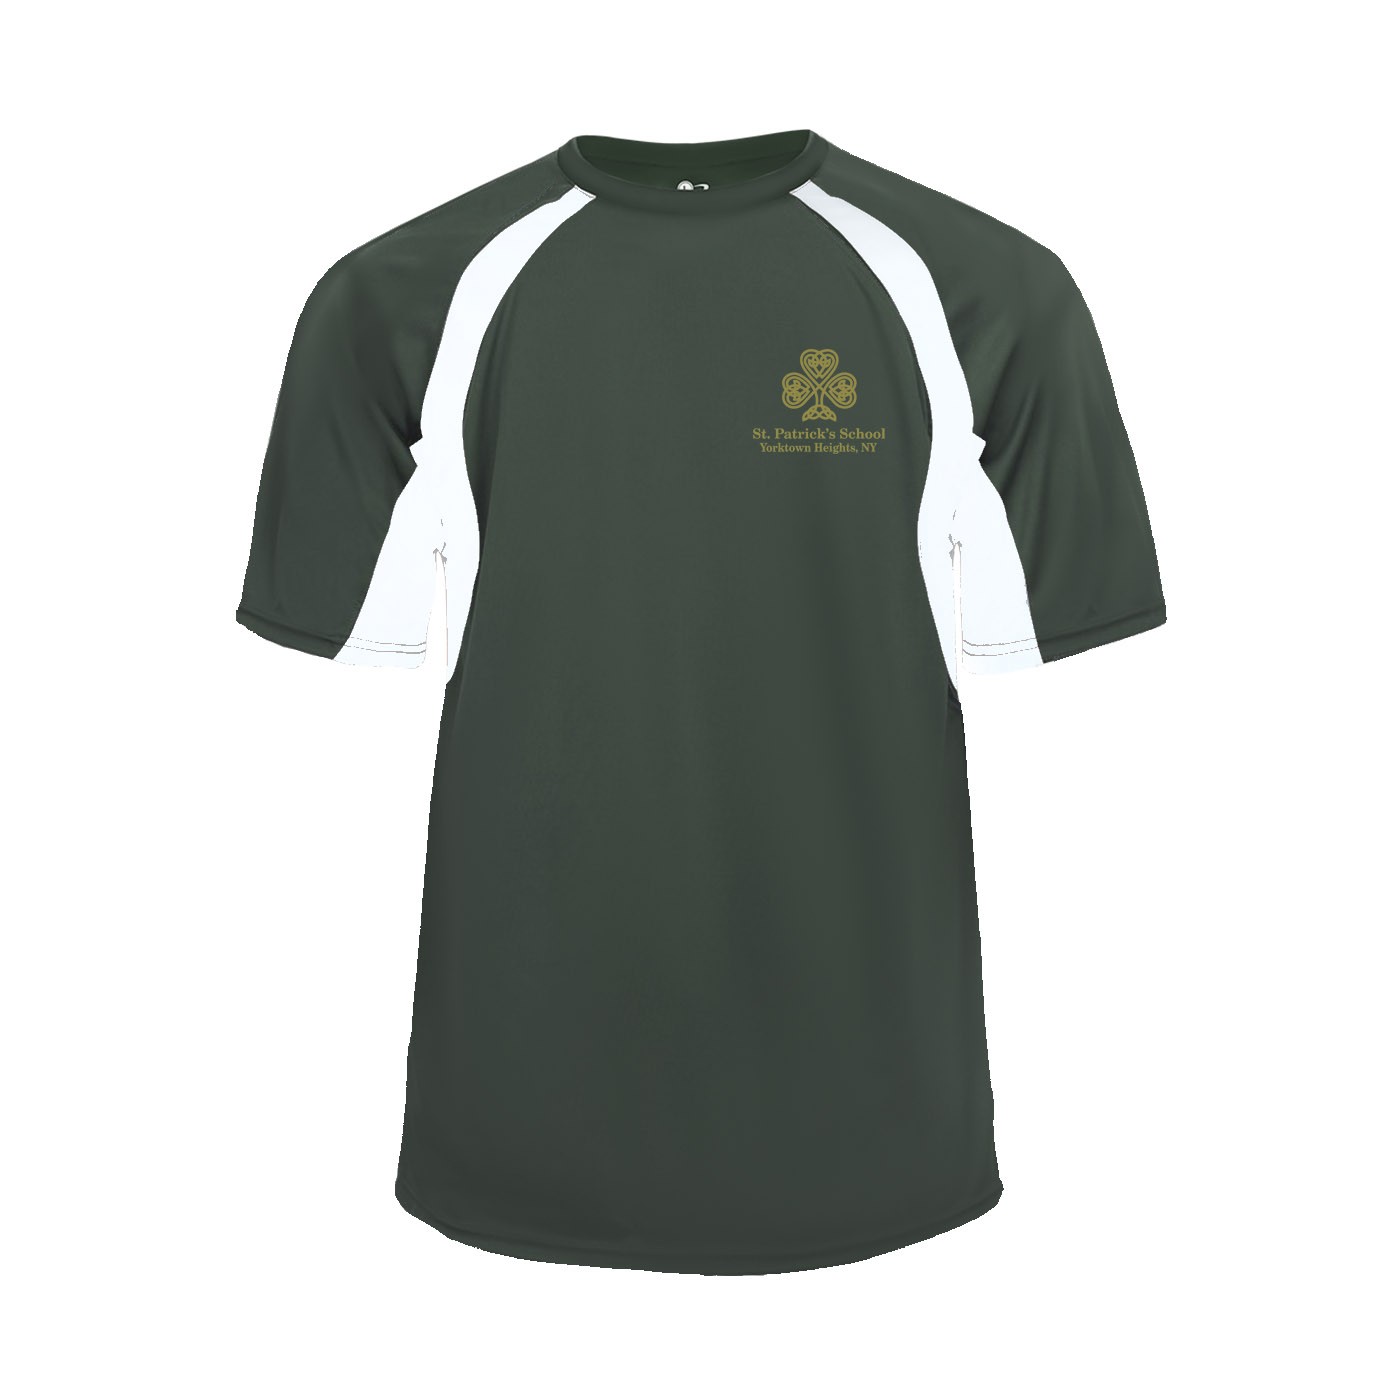 SPS Spirit Hook S/S T-Shirt w/ Left Crest Logo - Please Allow 2-3 Weeks for Delivery